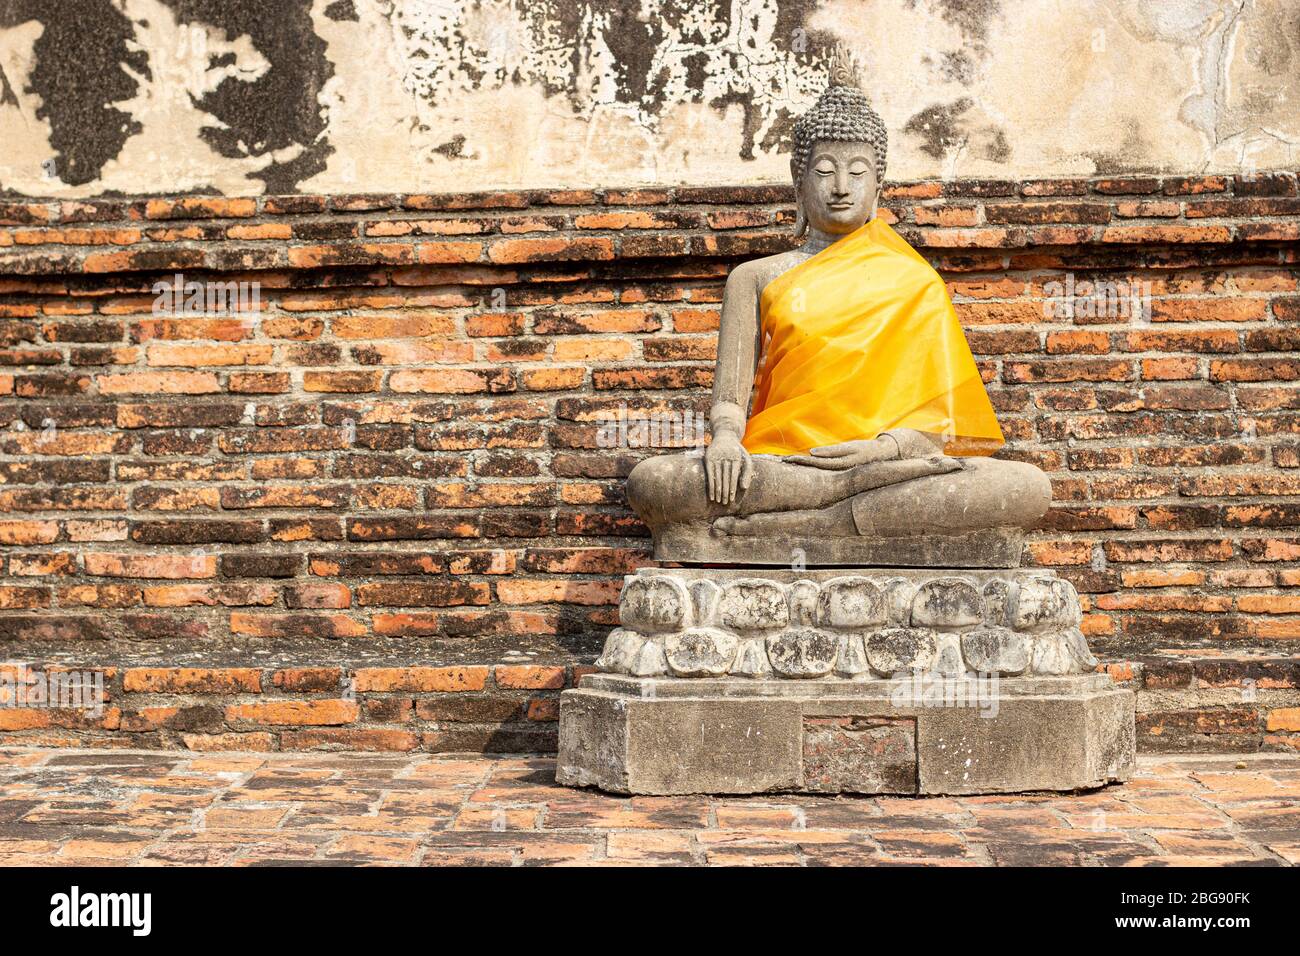 god of buddism figure at heritage temple architecture of Ayuthaya,Thailand. Religion art bulding concept Stock Photo